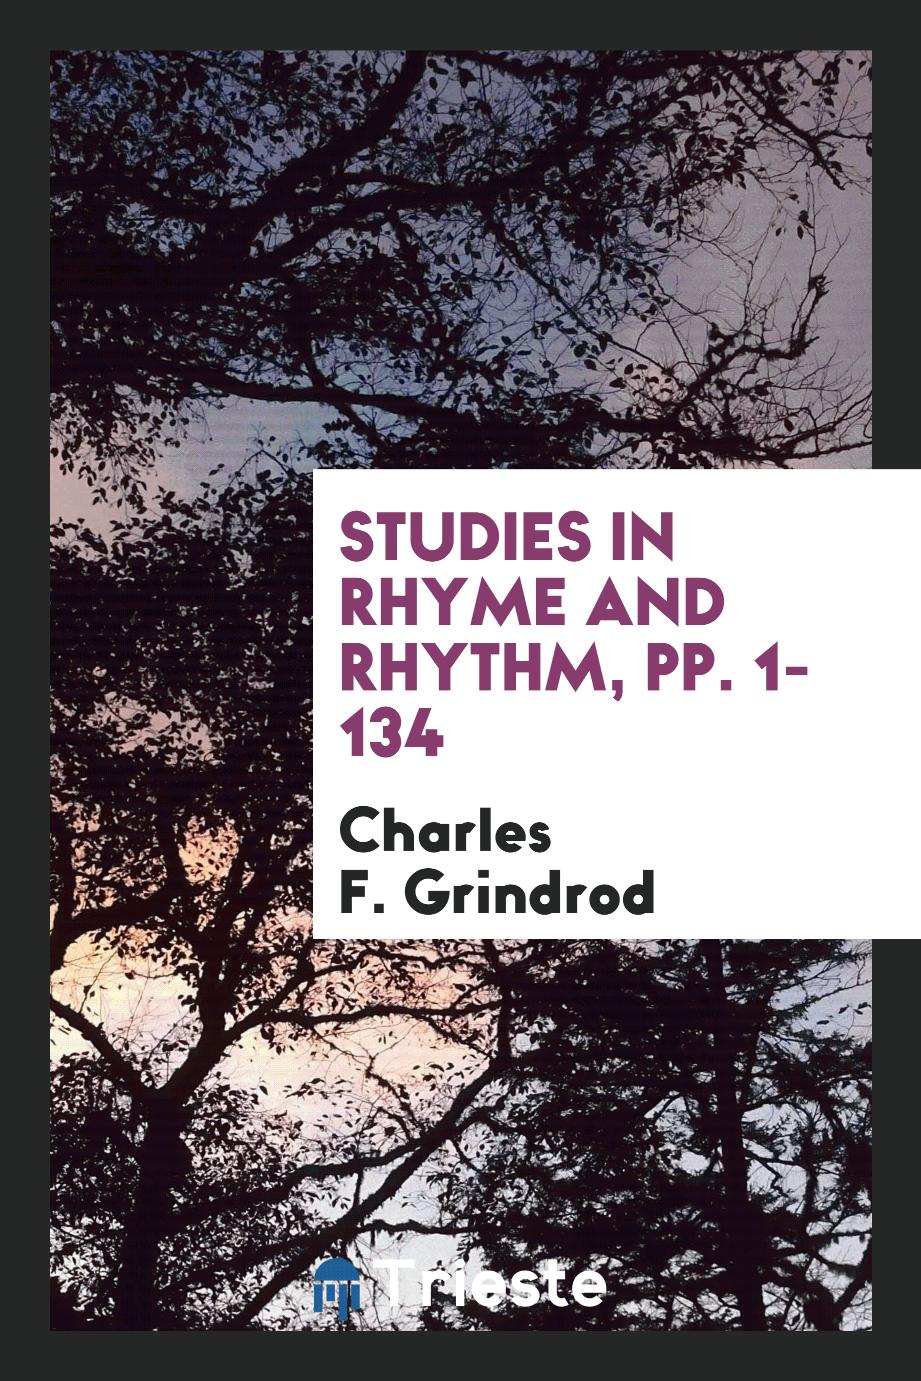 Studies in Rhyme and Rhythm, pp. 1-134